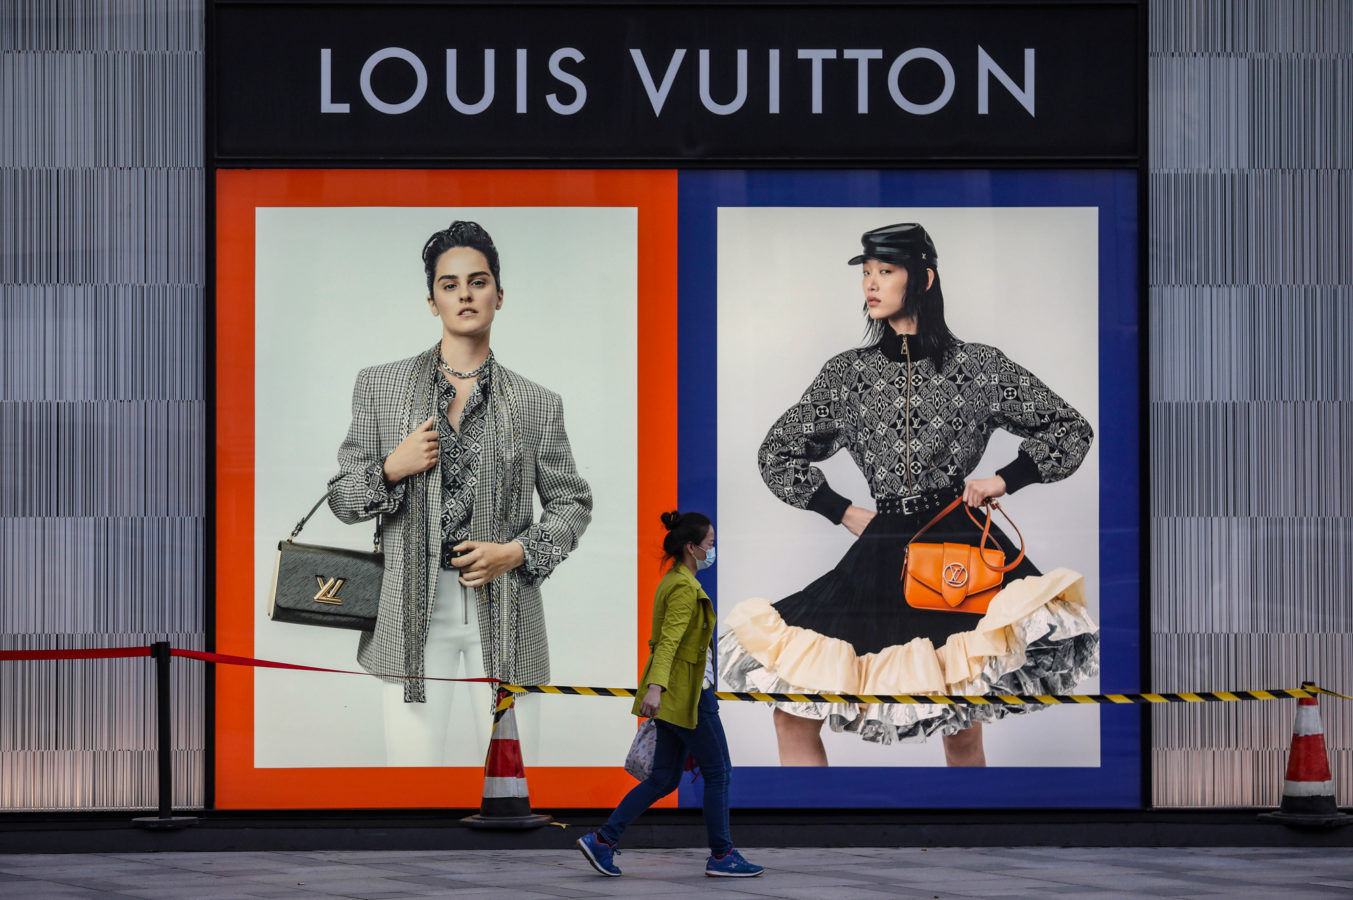 Lifestyle Asia KL on Instagram: Louis Vuitton announces South